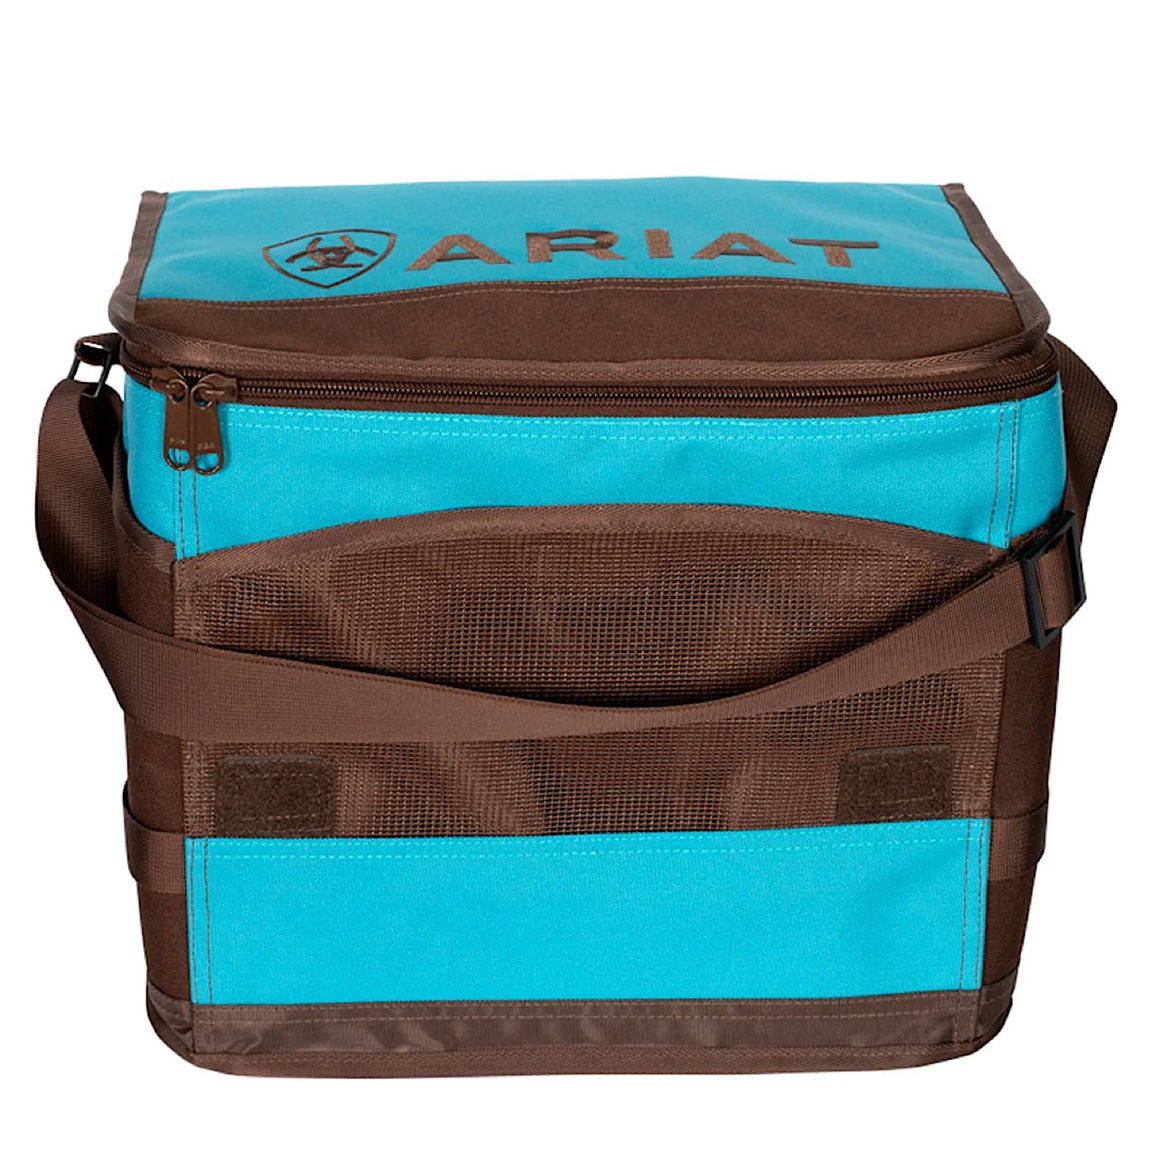 Ariat Cooler Bag Turquoise